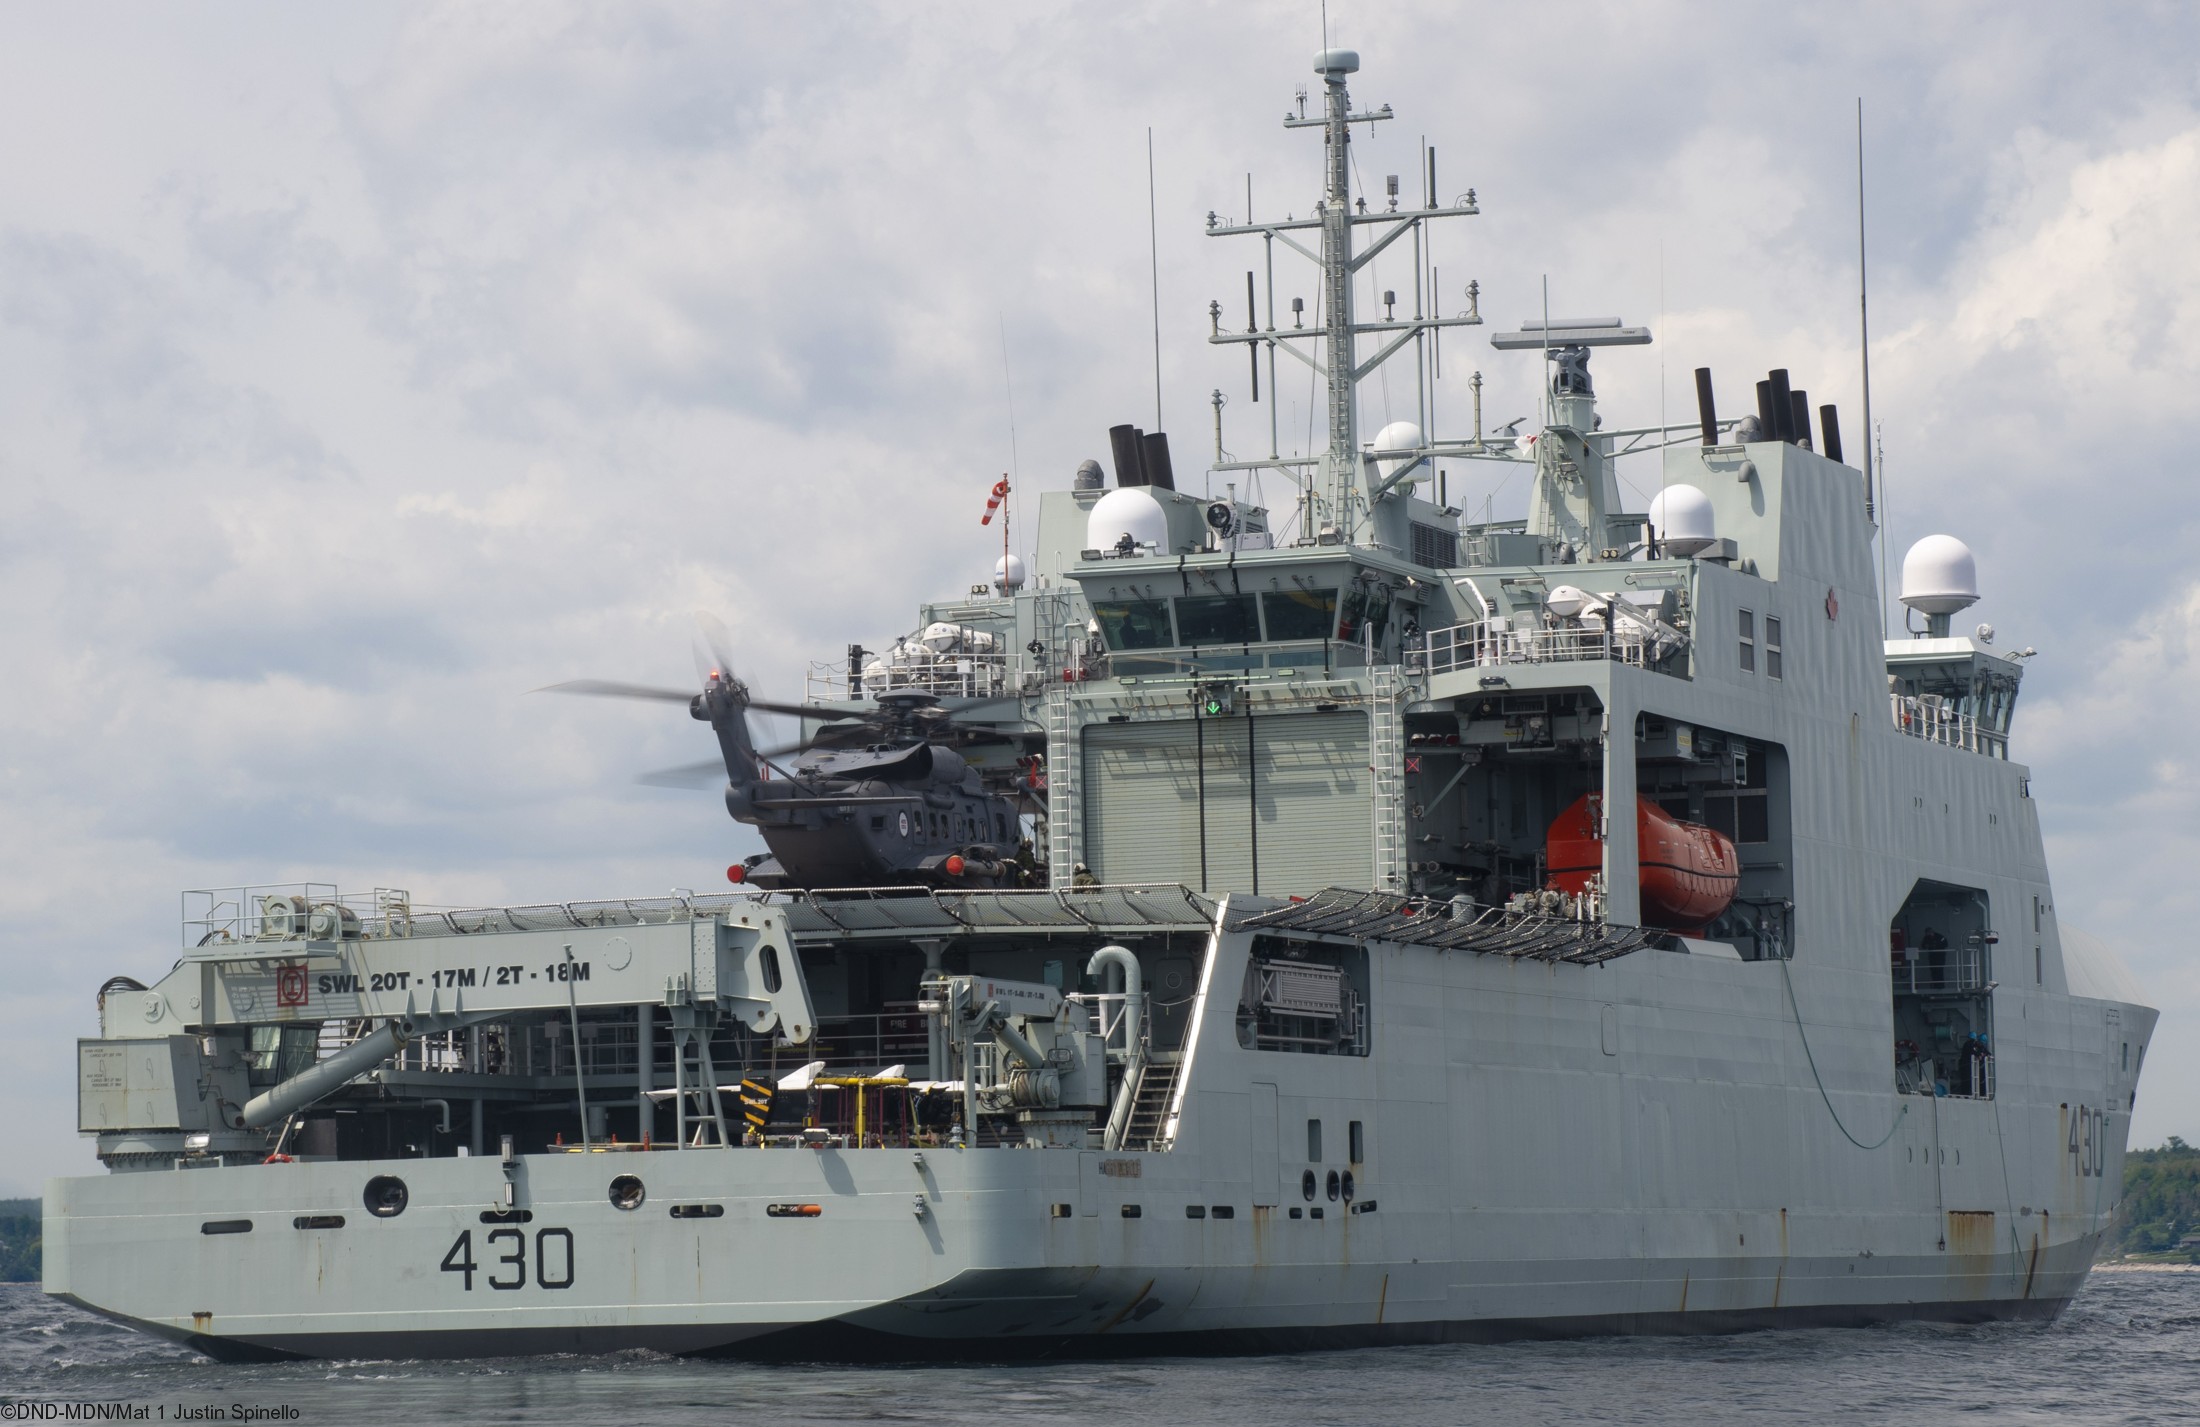 aopv-430 hmcs harry dewolf arctic offshore patrol vessel ncsm royal canadian navy 03